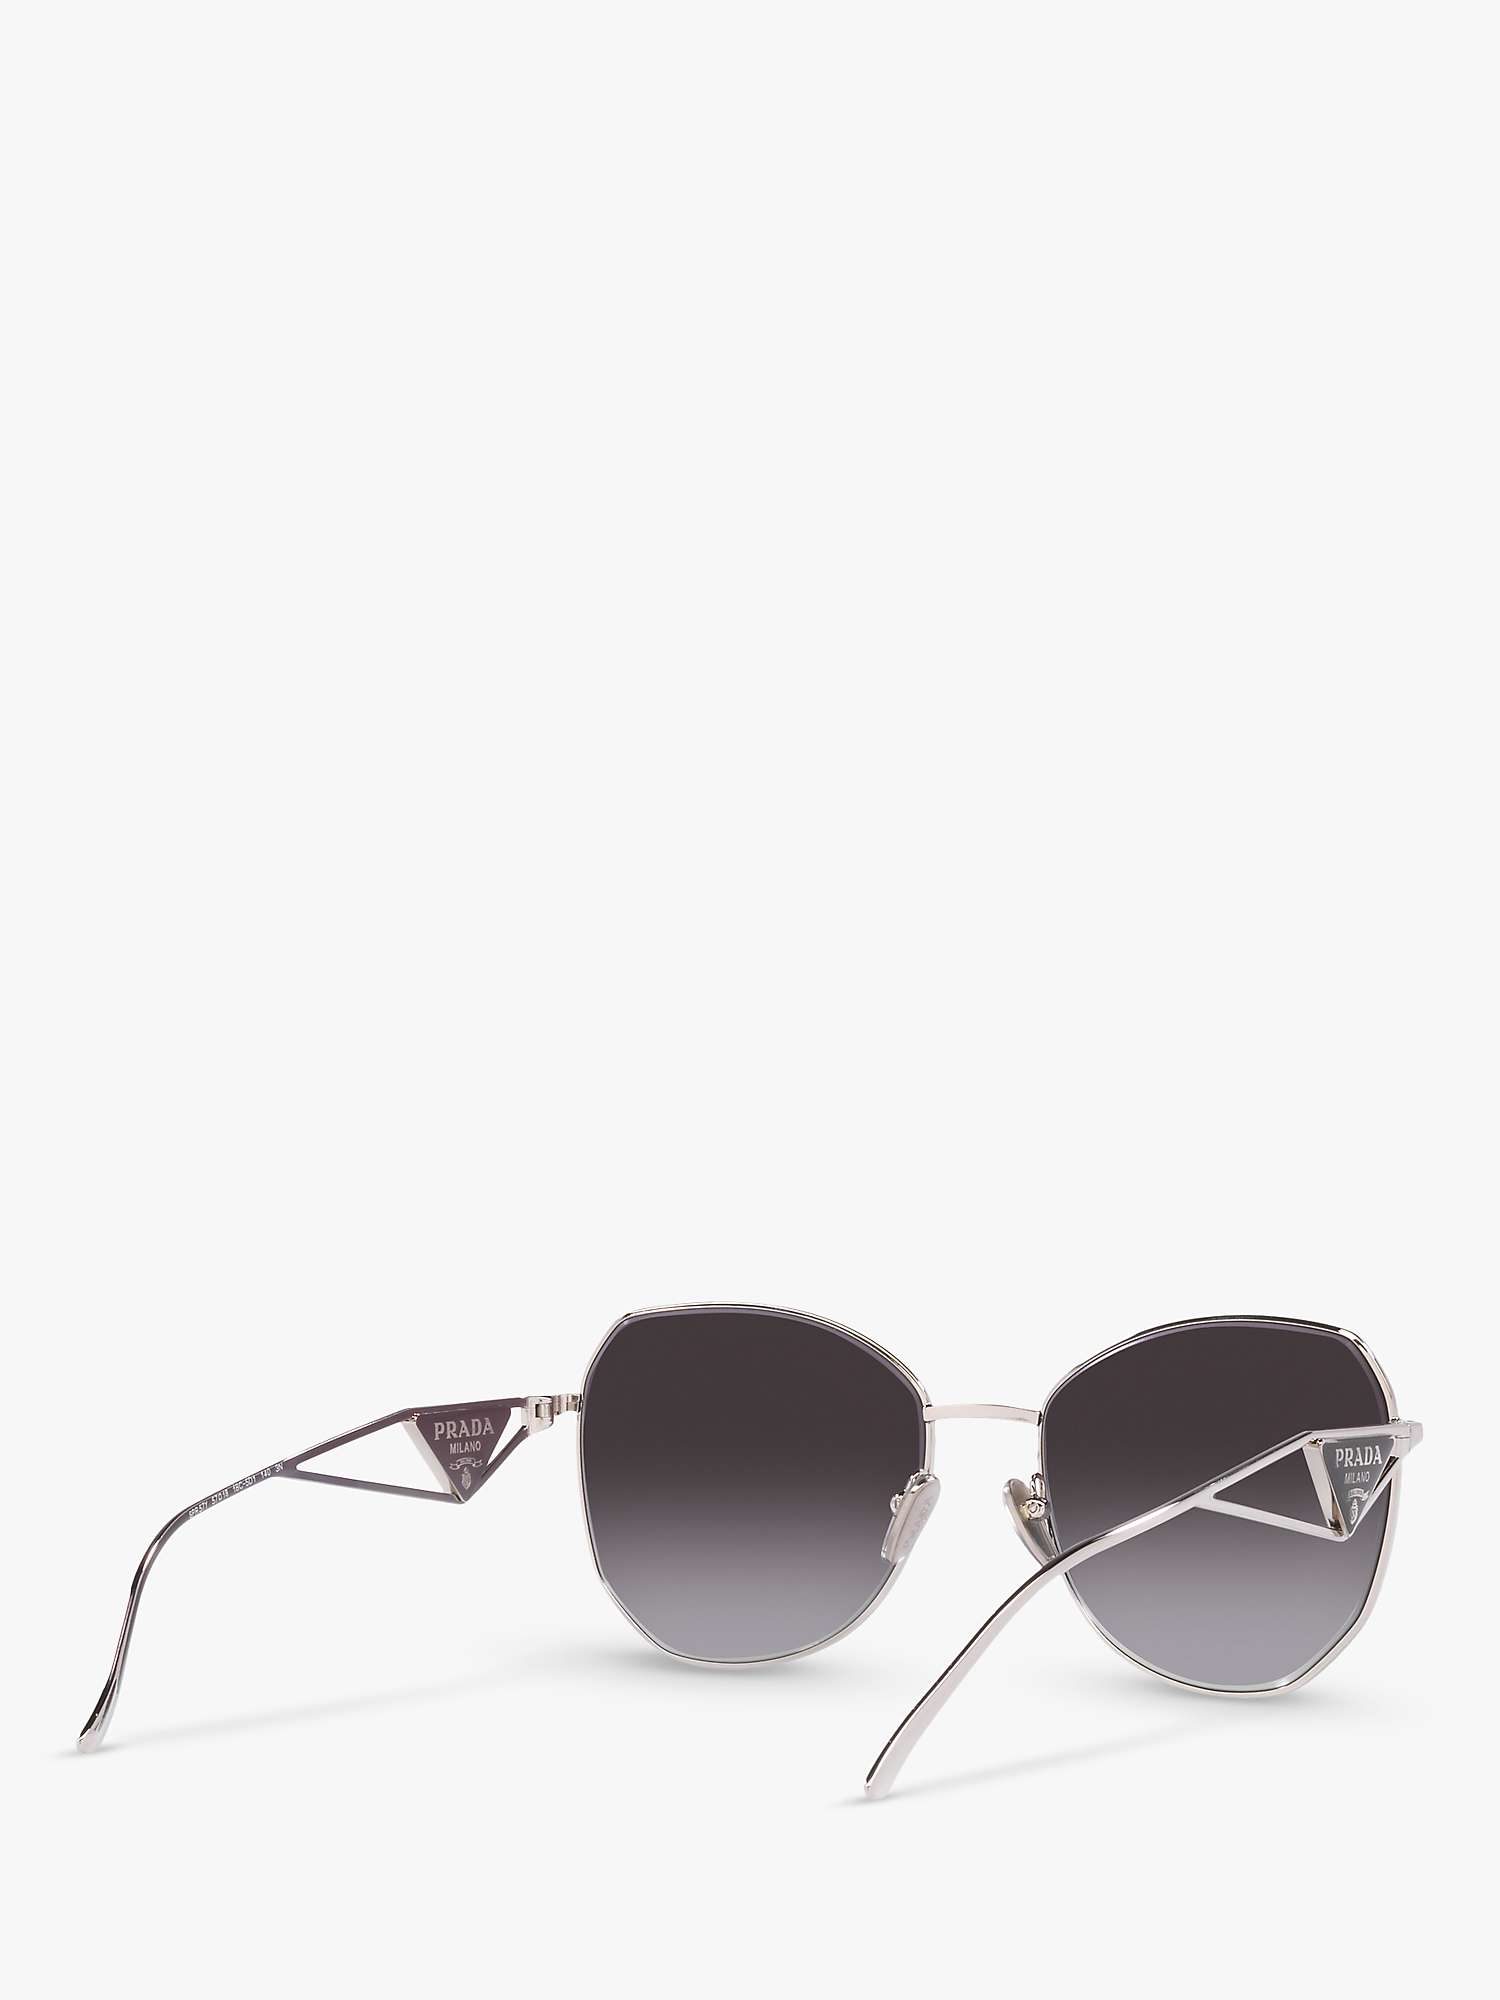 Buy Prada PR 57YS Women's Irregular Sunglasses, Silver/Grey Gradient Online at johnlewis.com